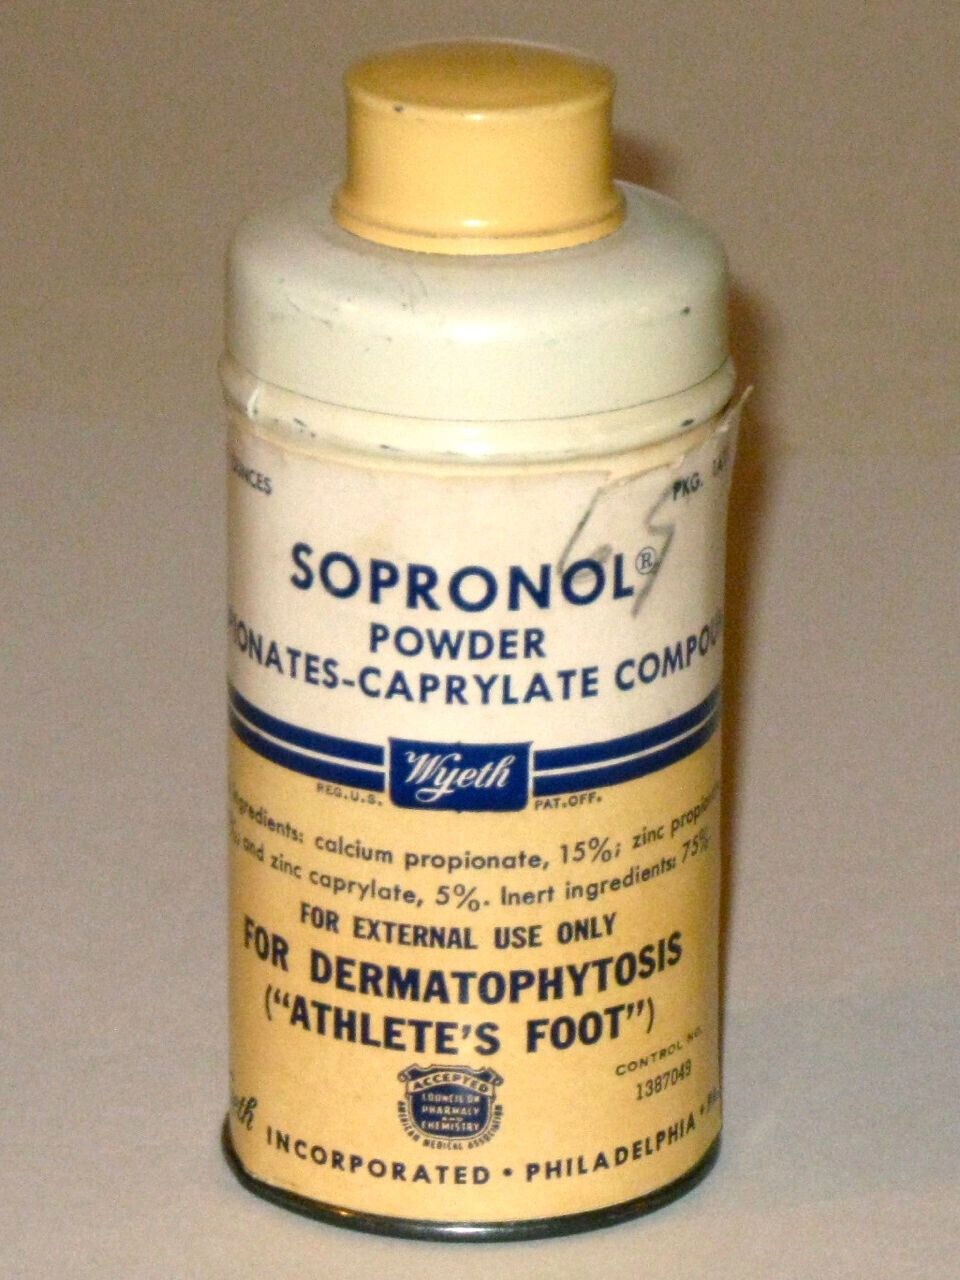 Vintage 1950s Wyeth SOPRONOL Powder Advertising Tin Can Original Paper Label